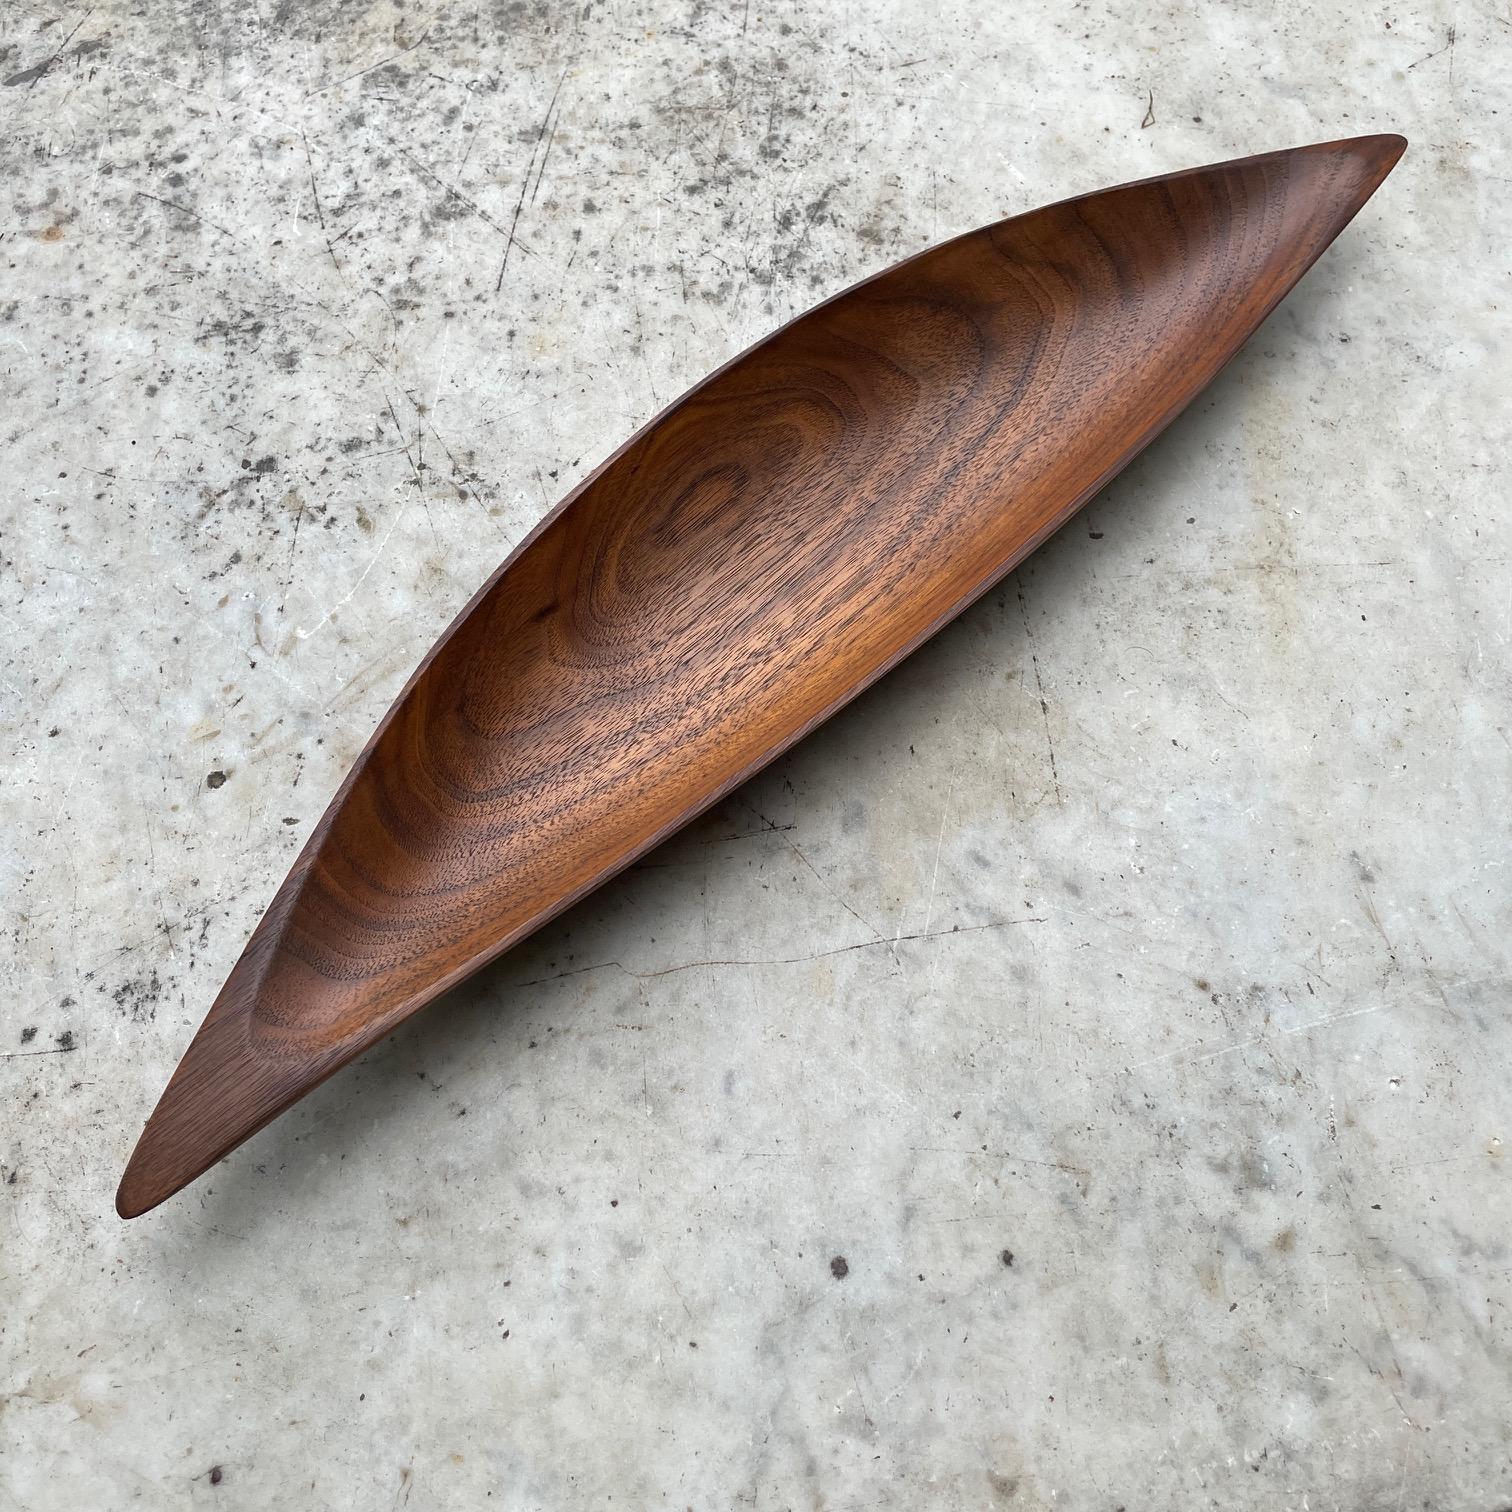 Teak American Craftsman Emil Milan Centerpiece Organic Wood Bowl 20th Century Design For Sale